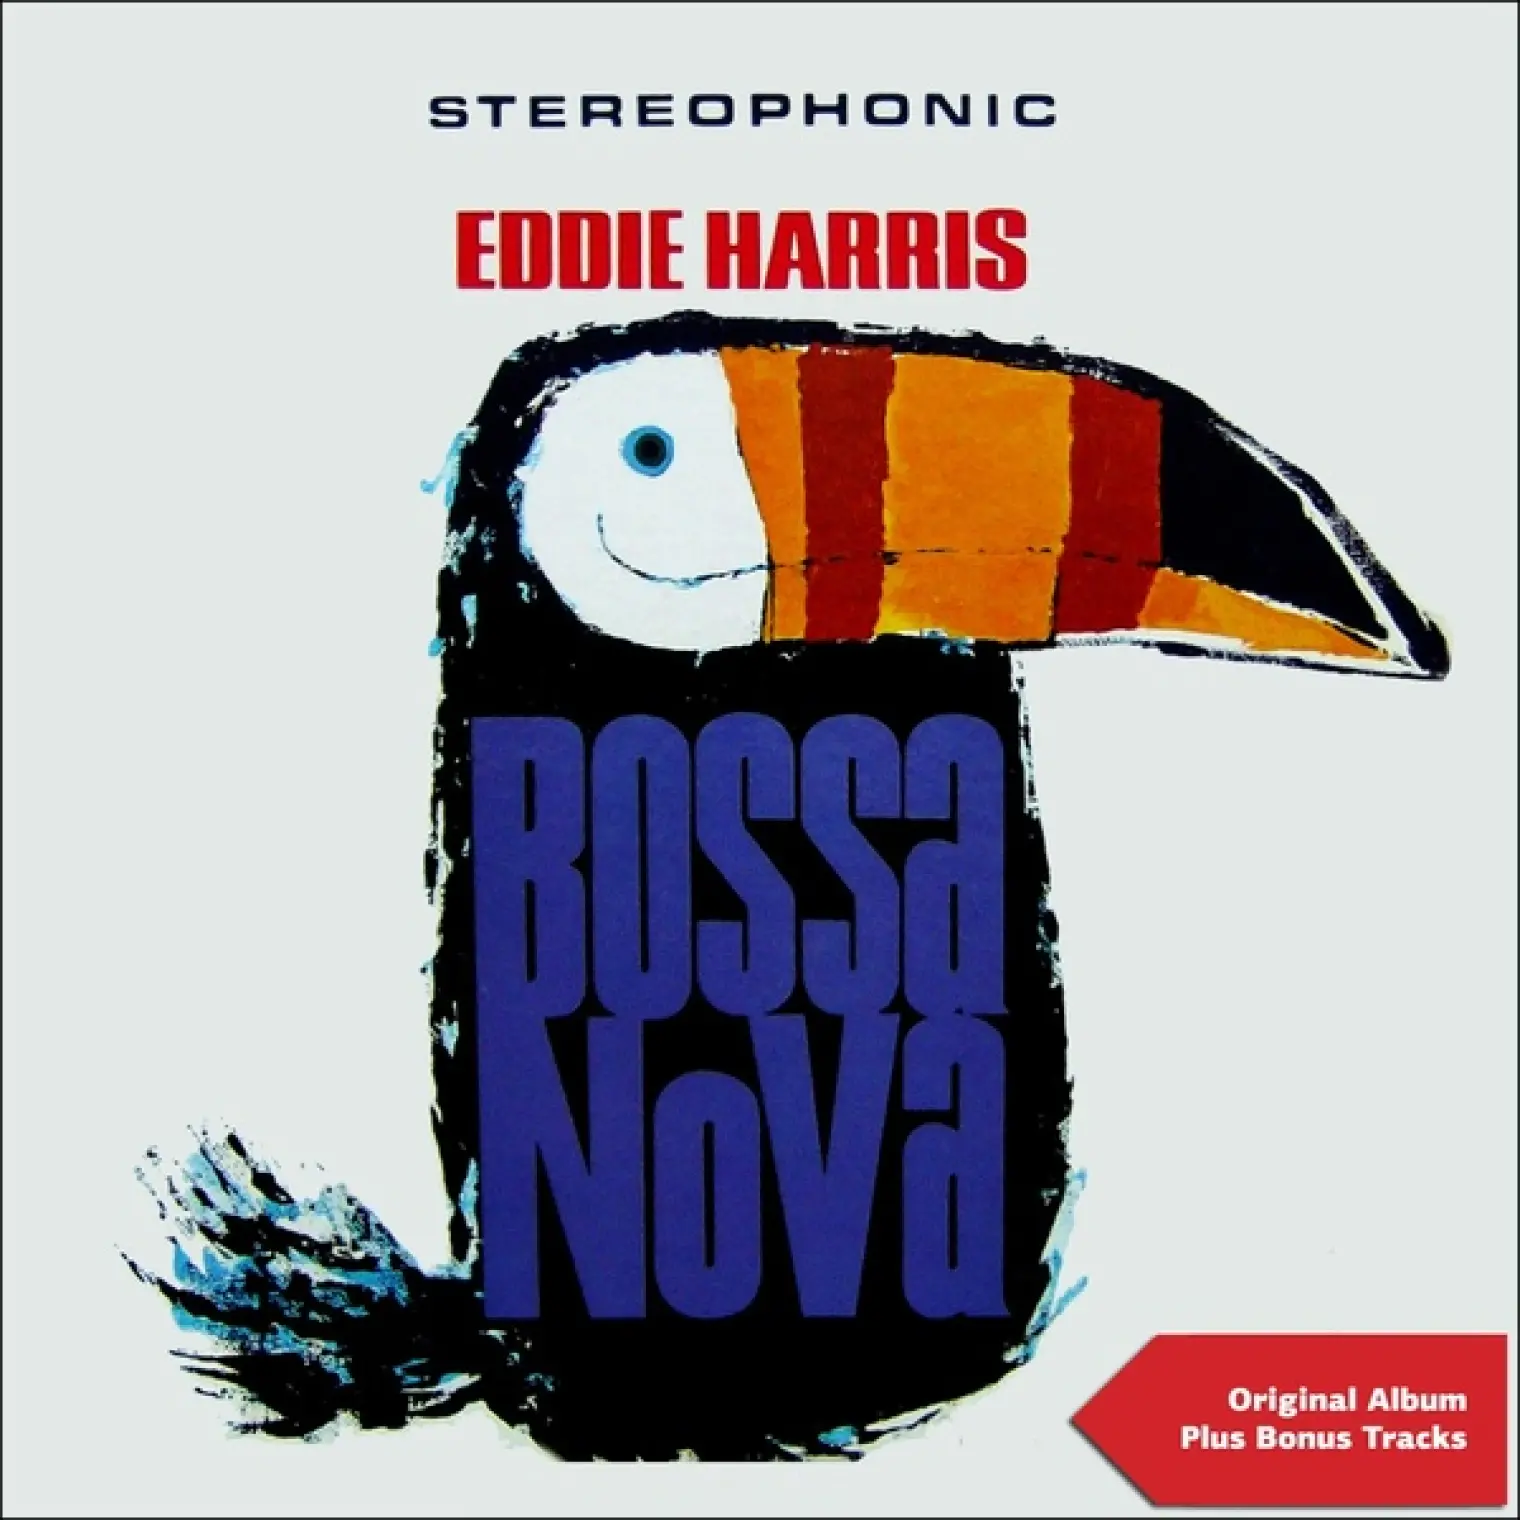 Bossa Nova (Original Bossa Nova Album Plus Bonus Tracks) -  EDDIE HARRIS 